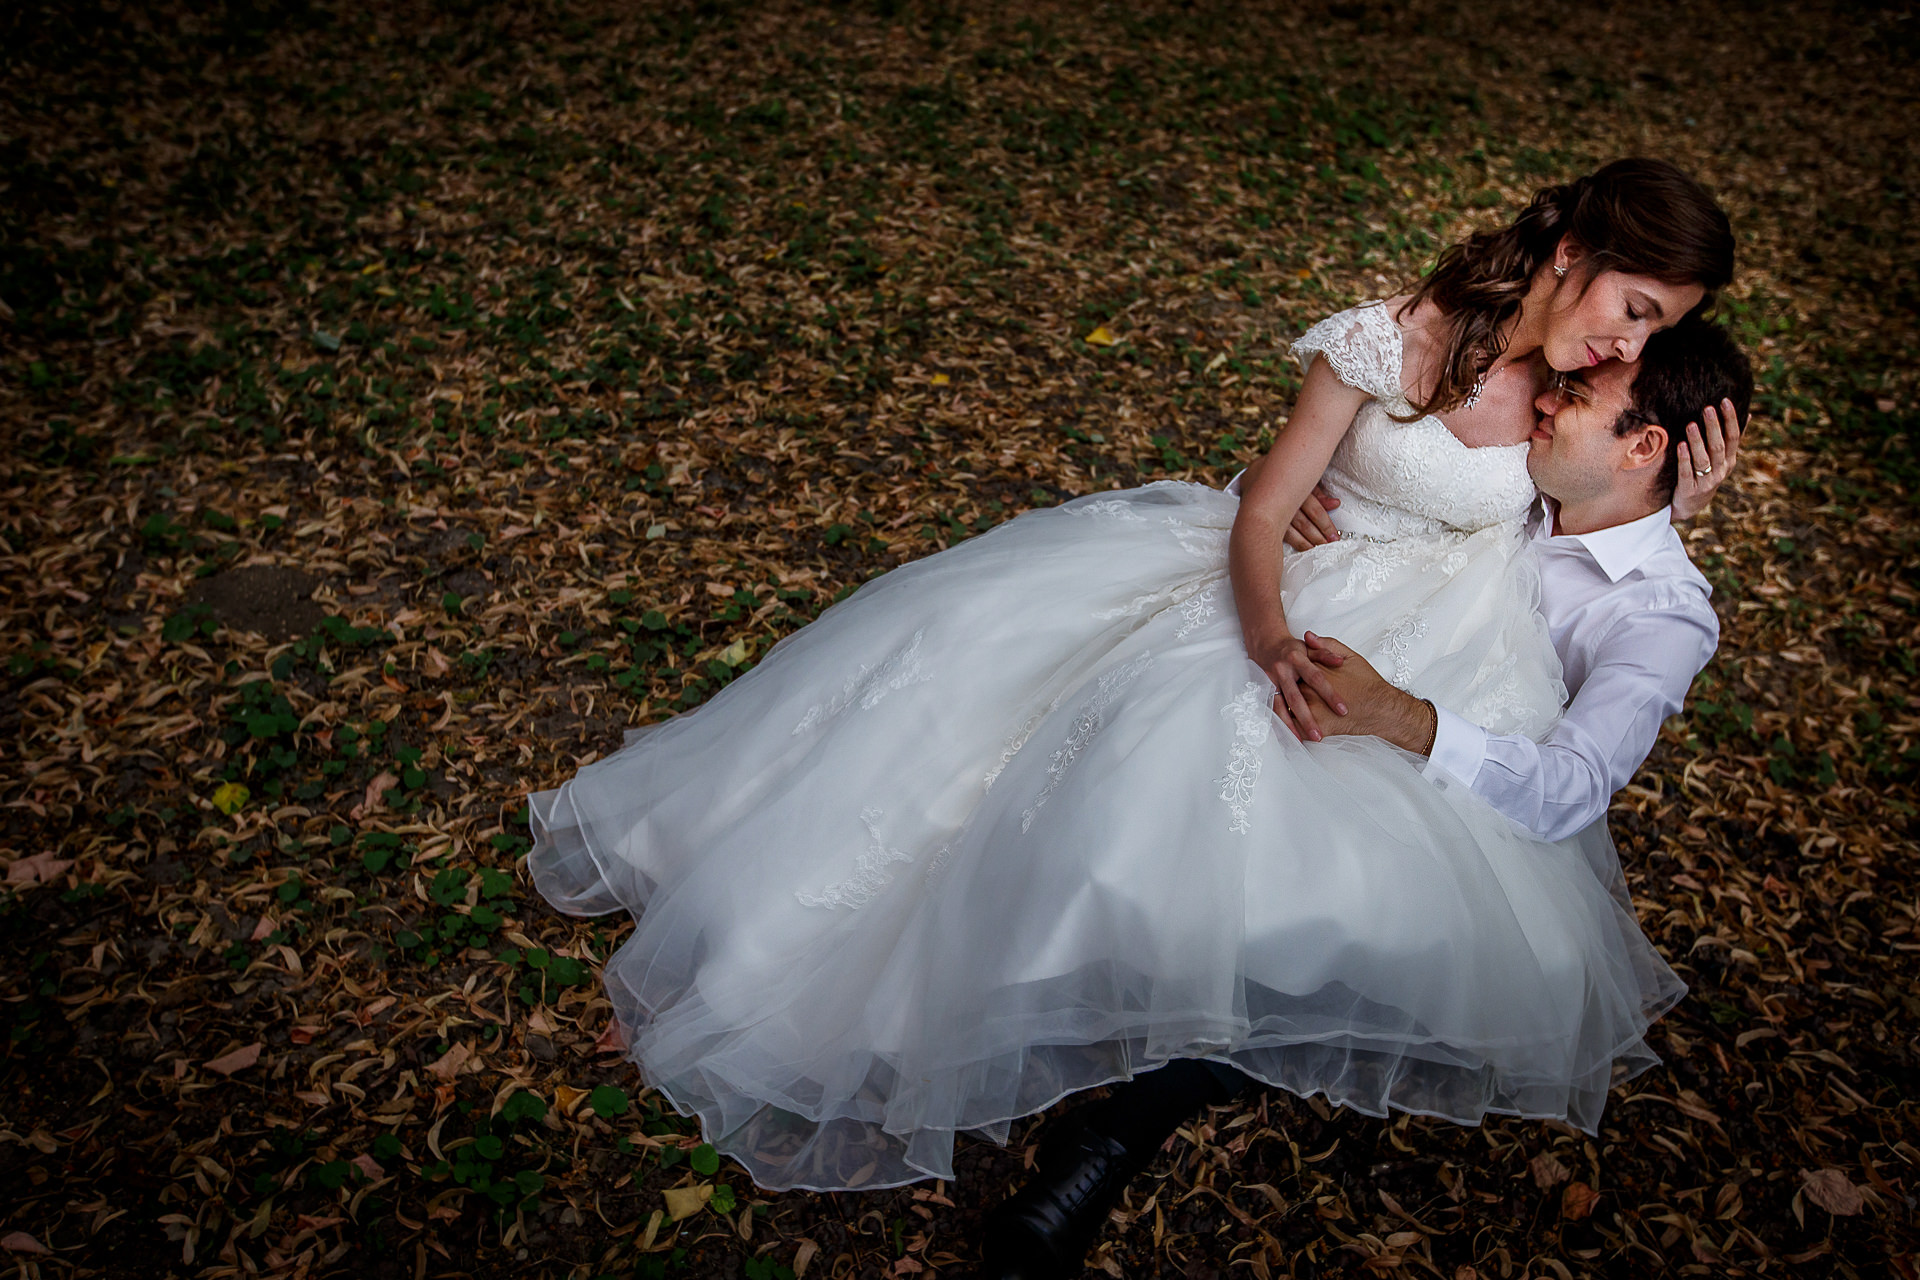 After wedding session - Buftea, Romania - Mihai Zaharia Photography - Destination wedding photographer - 13